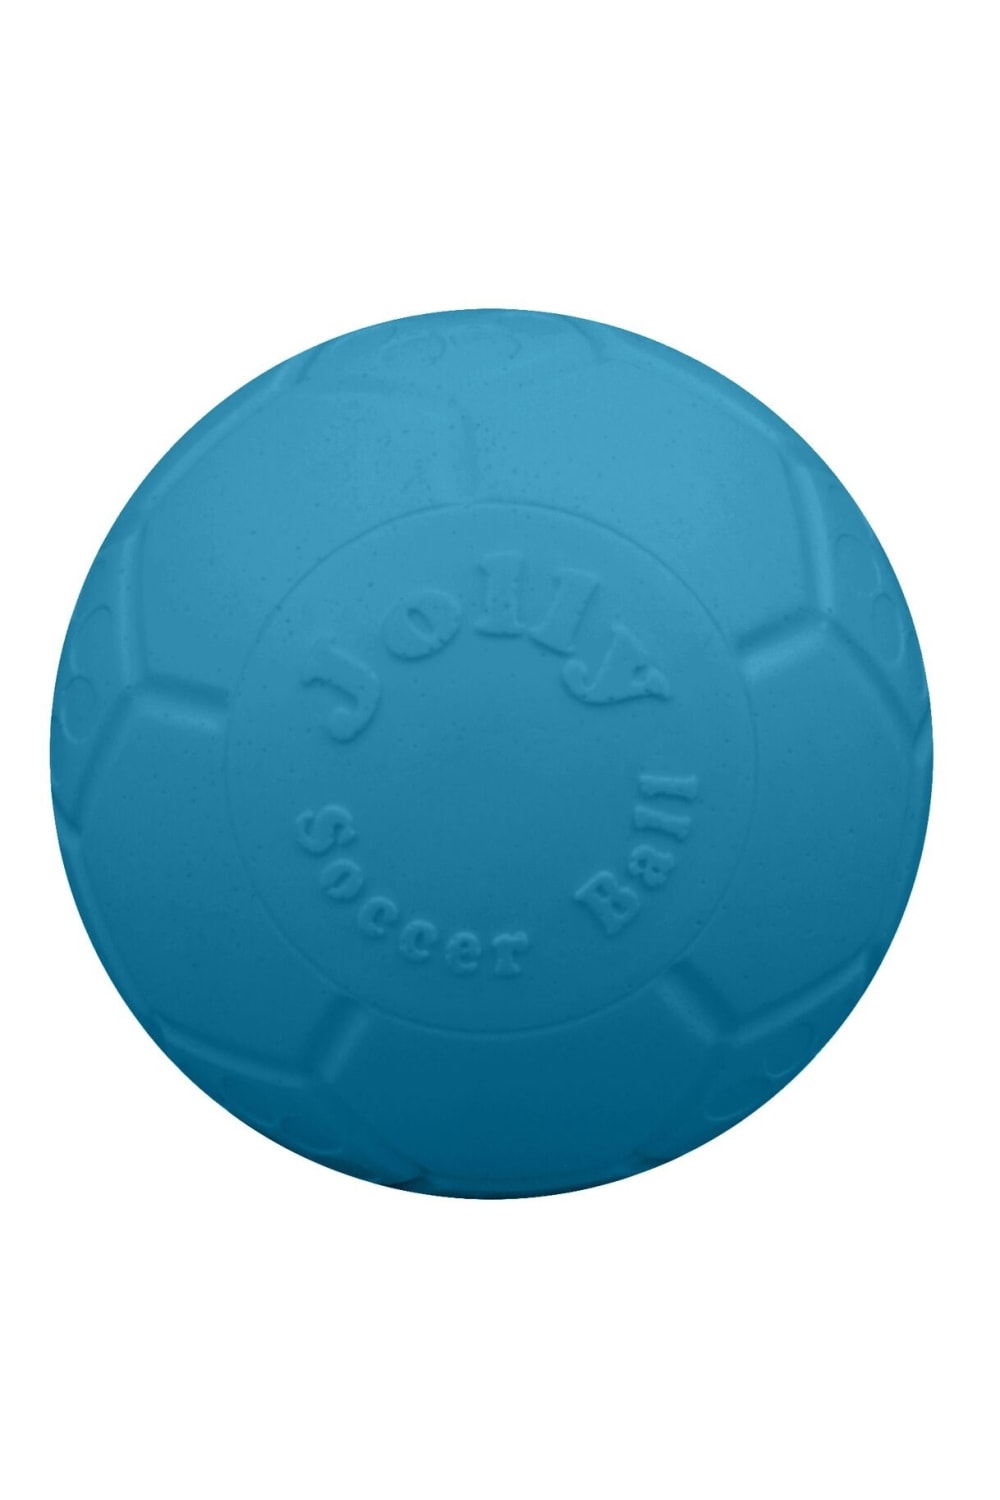 Jolly Pets Jolly Soccer Ball (Ocean Blue) (6 inches)